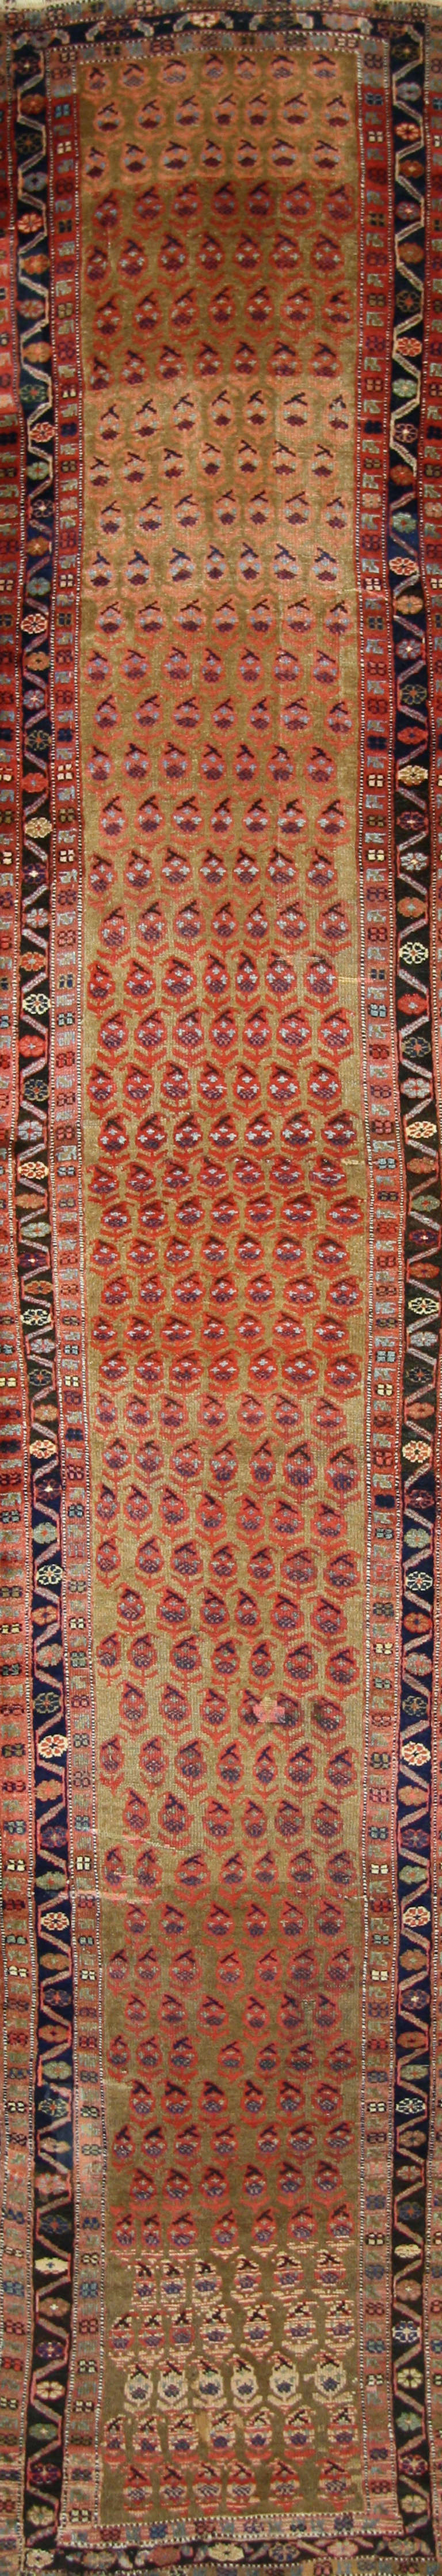 Late 19th Century Antique Persian Kurd Carpet Runner, Long Persian Runner 2